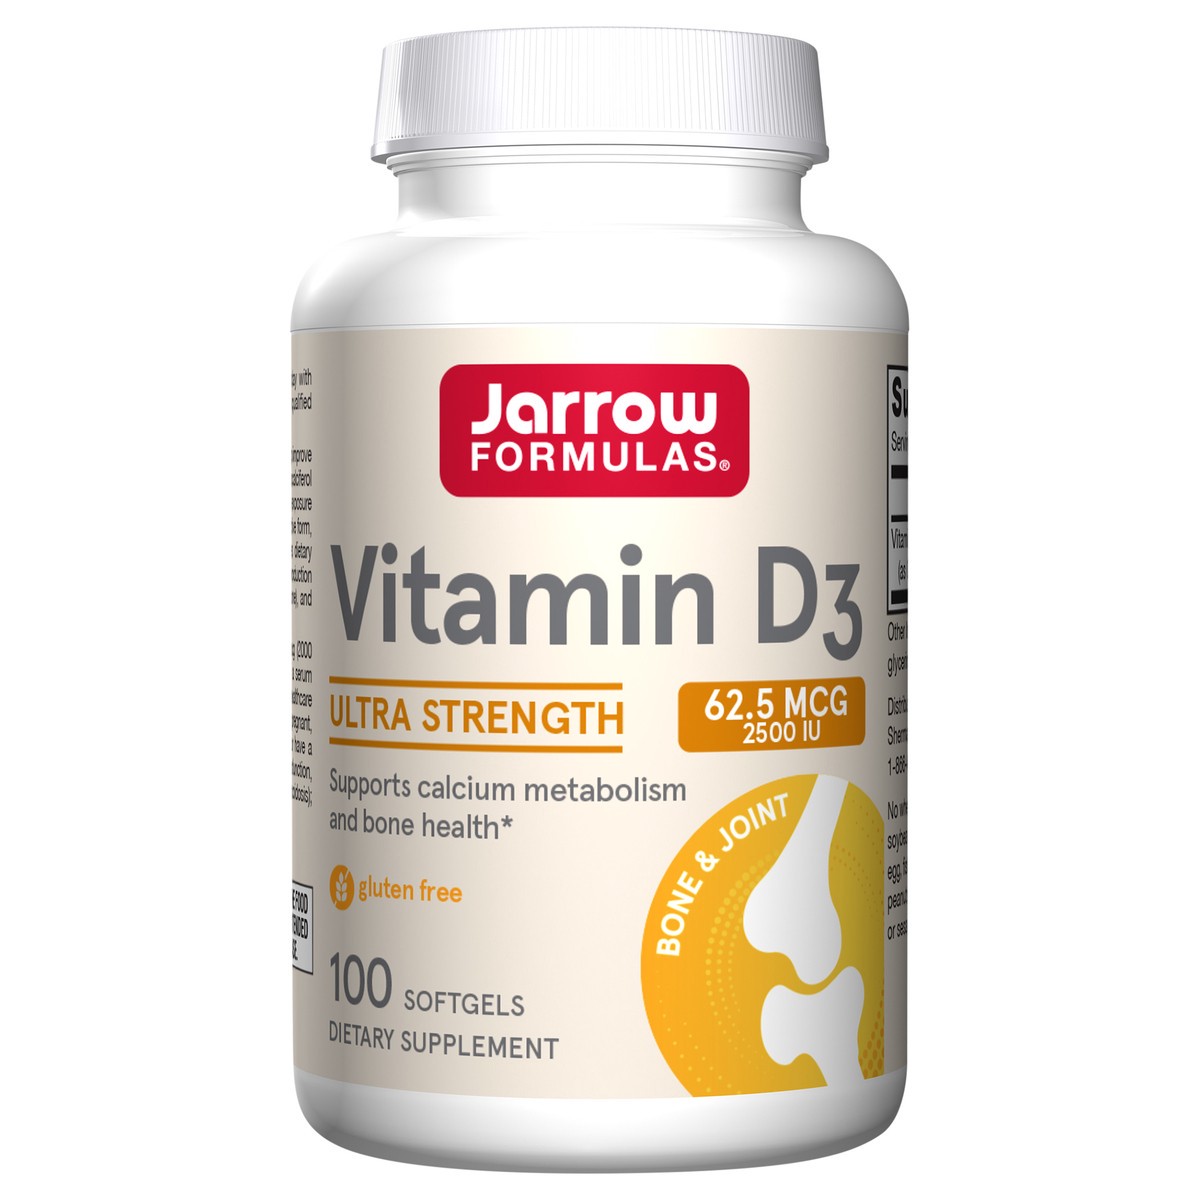 slide 1 of 4, Jarrow Formulas Vitamin D3 Ultra Strength 2500 IU (62.5 mcg) - 100 Servings (Softgels) - Supports Calcium Metabolism, Bone Health & Immune Response - Dietary Supplement - Gluten Free, 100 ct